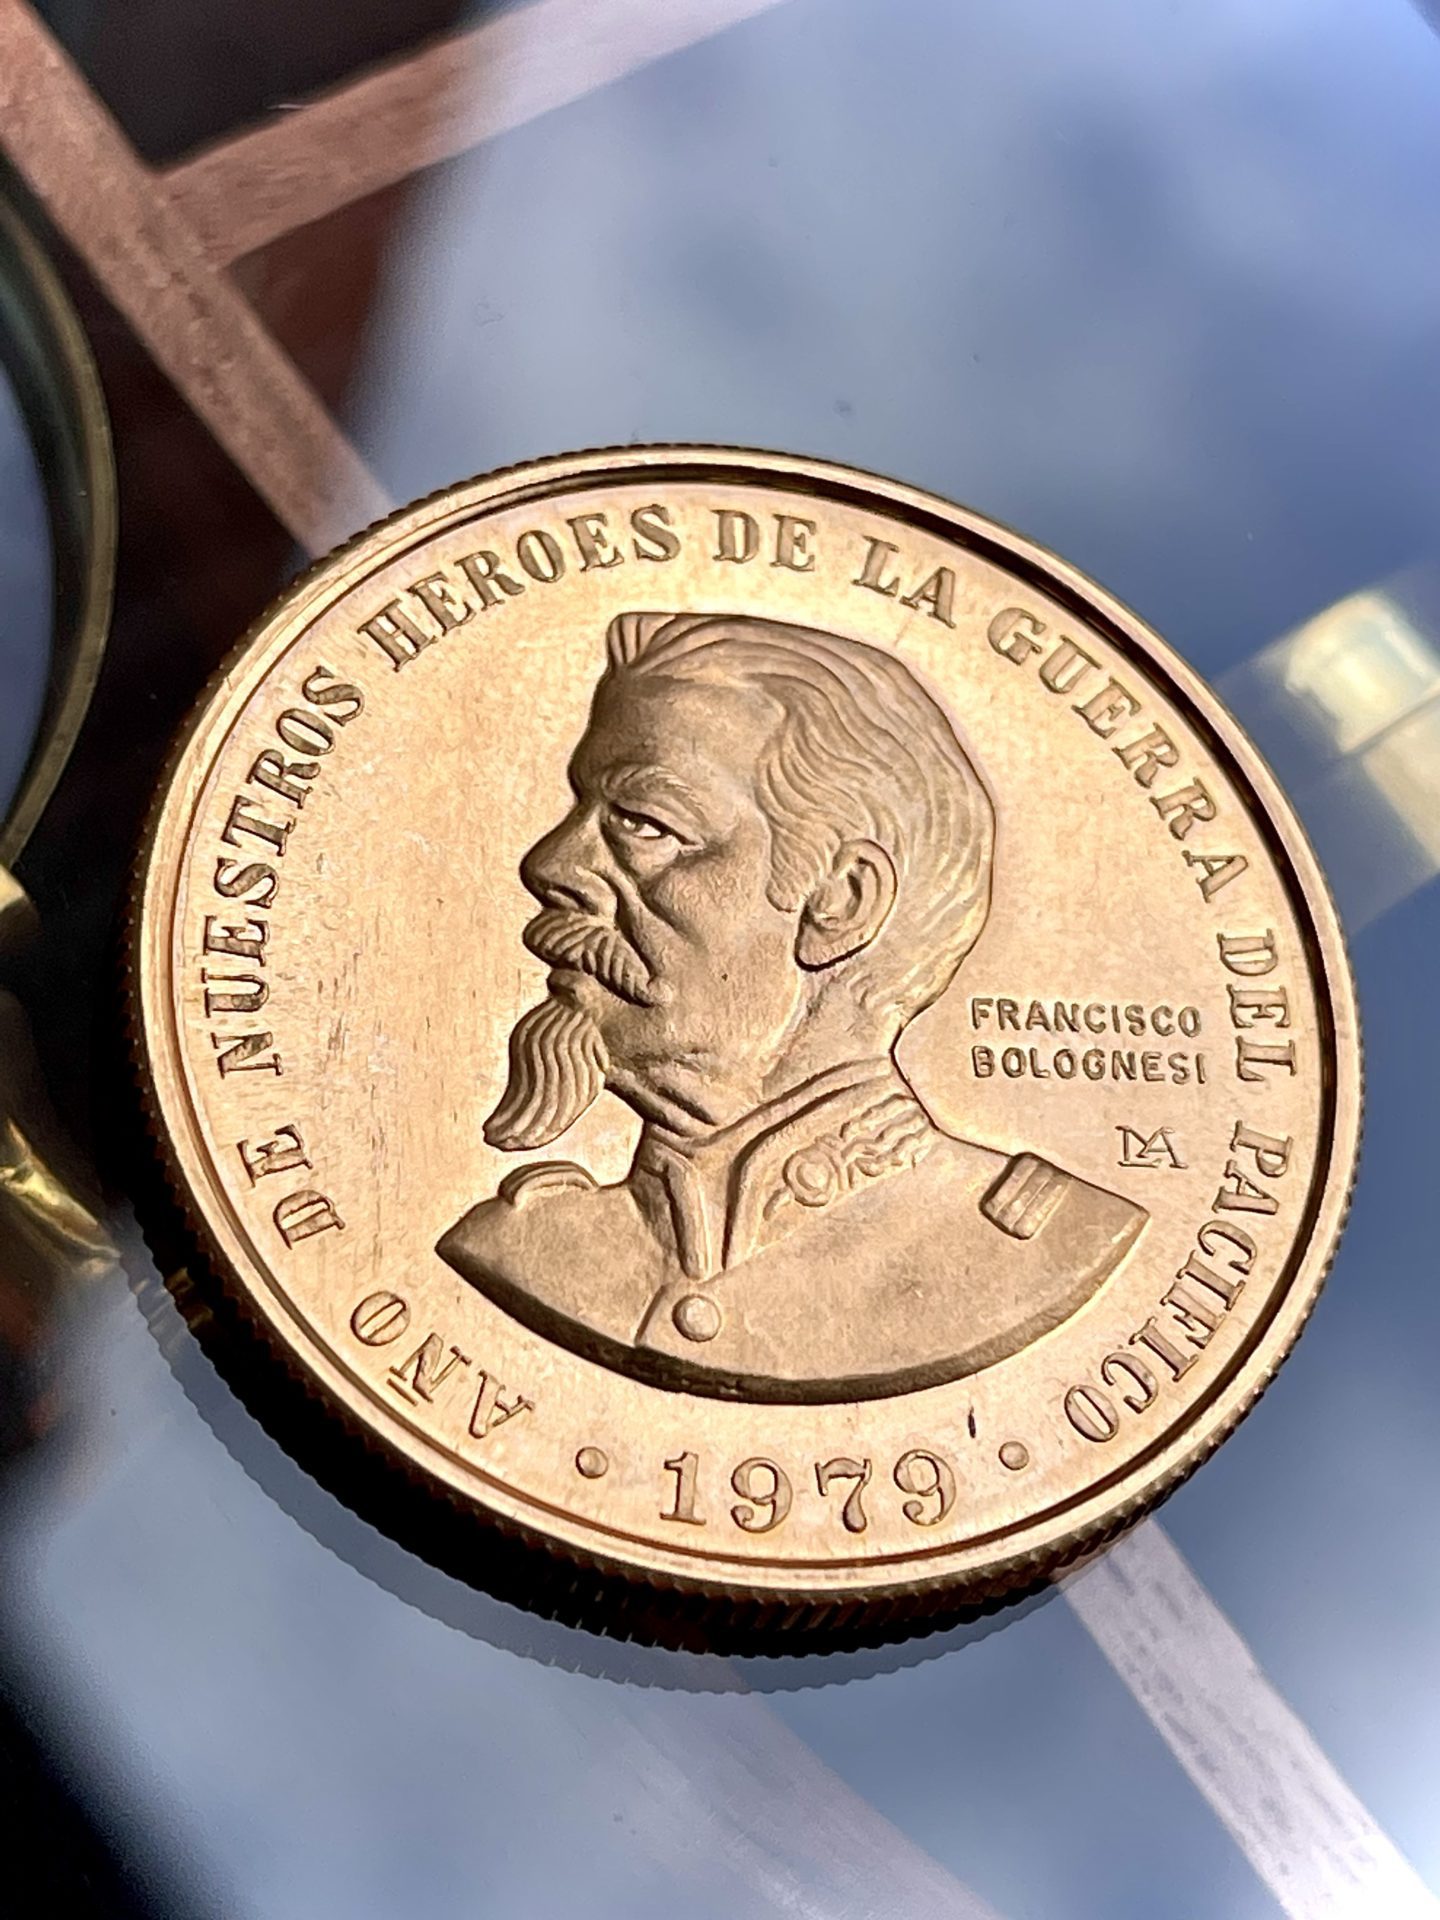 Peru 1979 100000 soles Francisco bolognesi 1oz gold